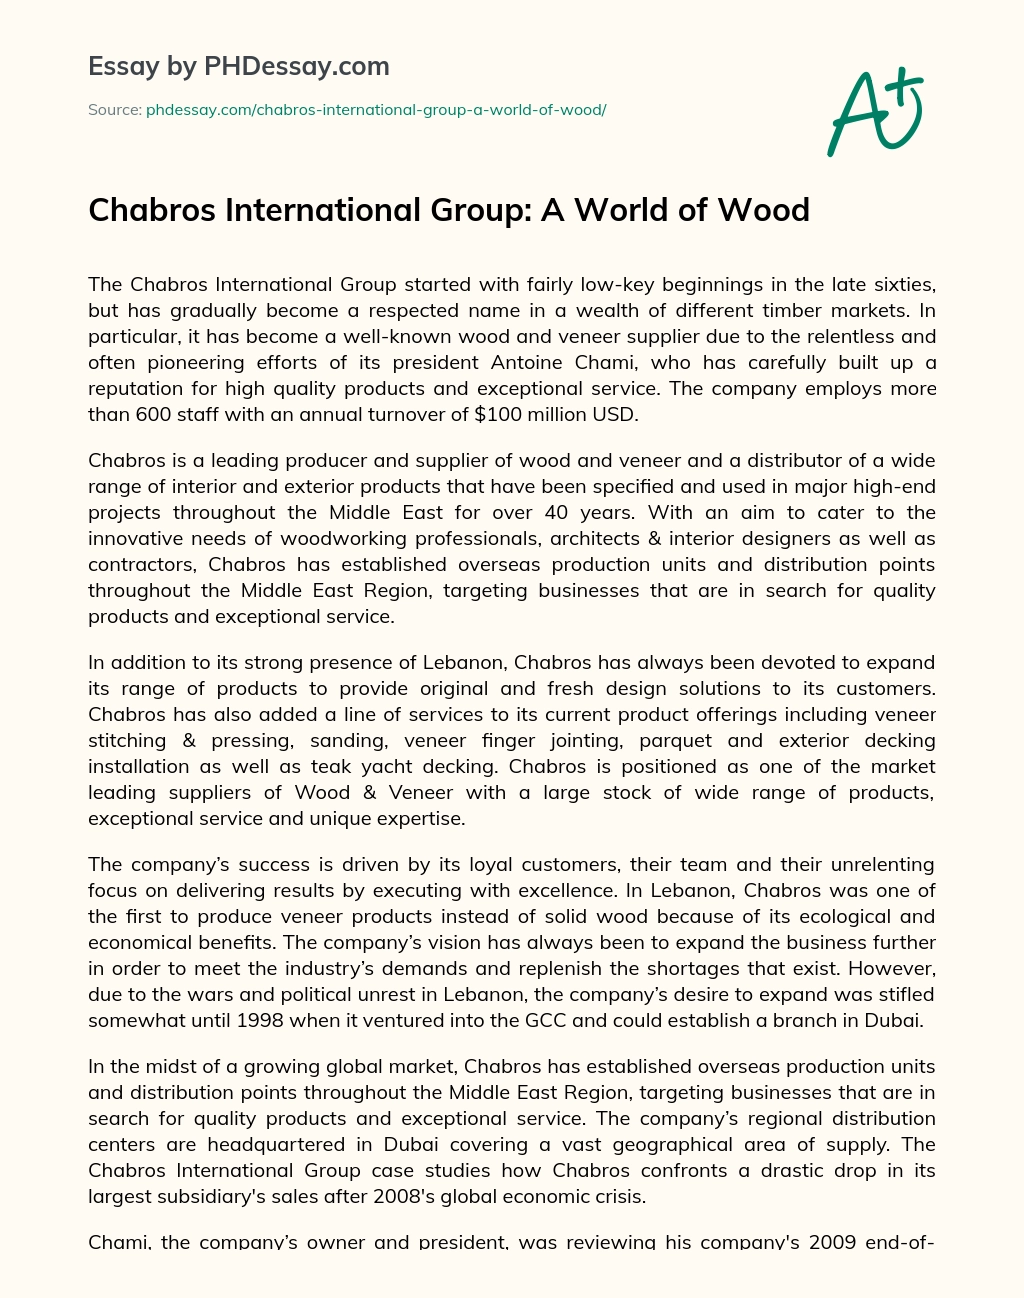 Chabros International Group: A World of Wood essay